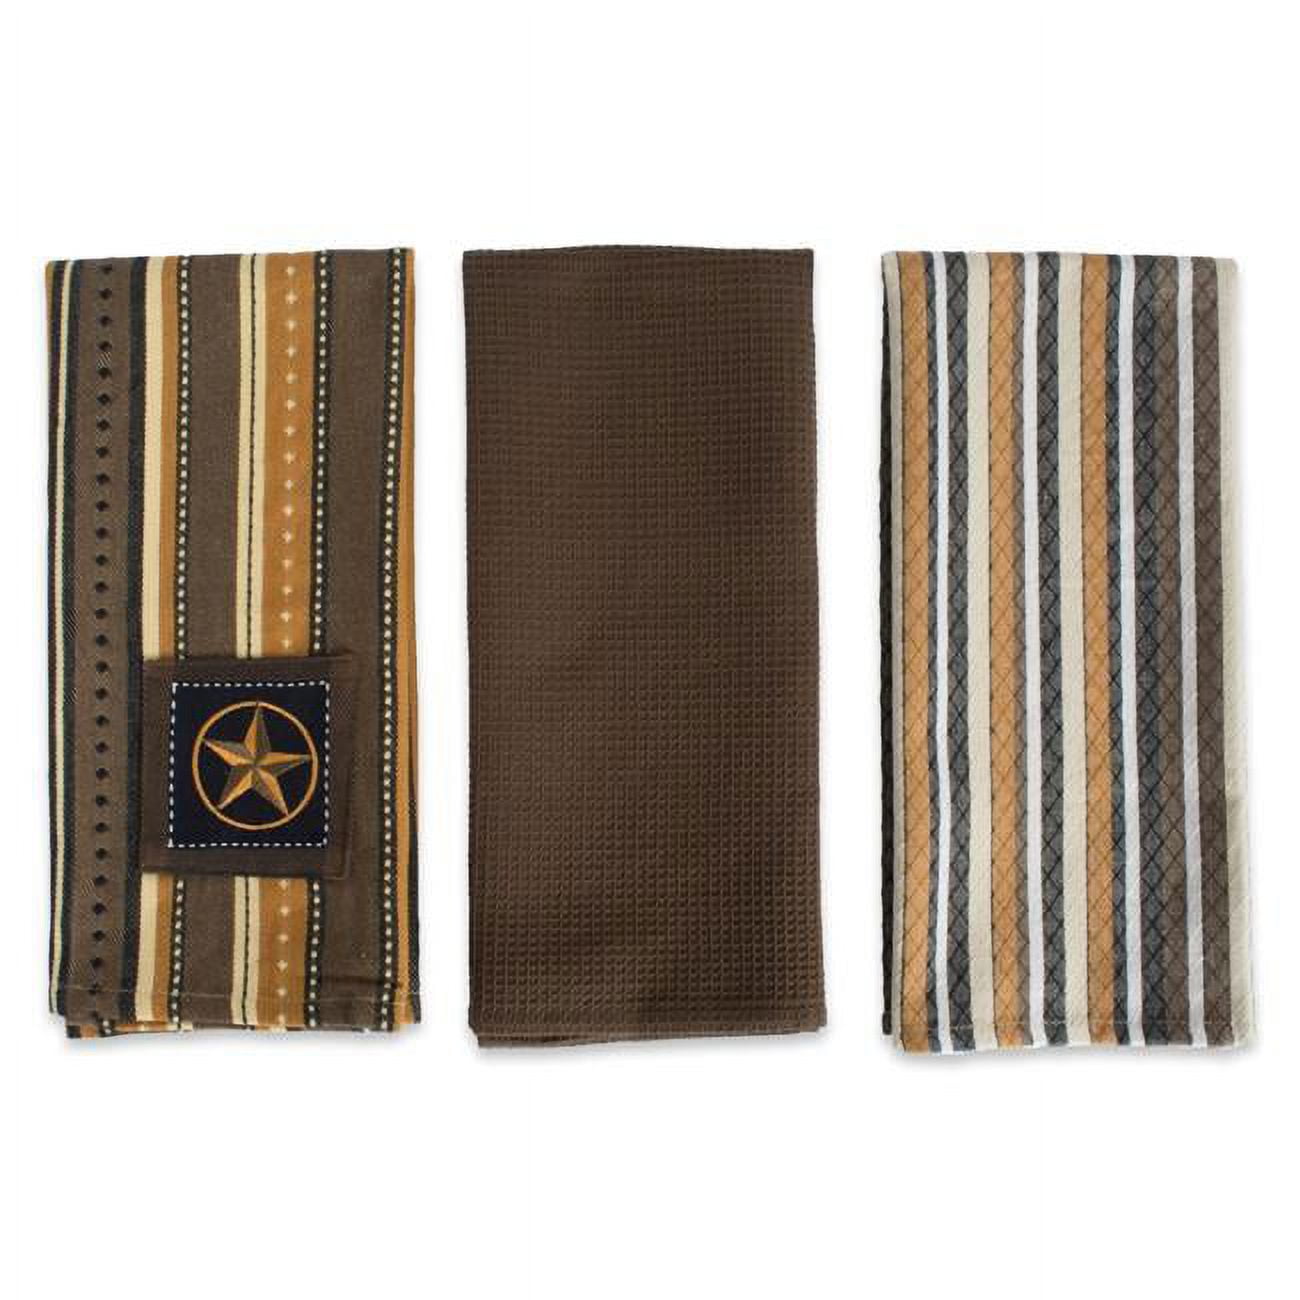 Design Imports Camz10752 Applique Star Dish Towel Set - Set Of 3